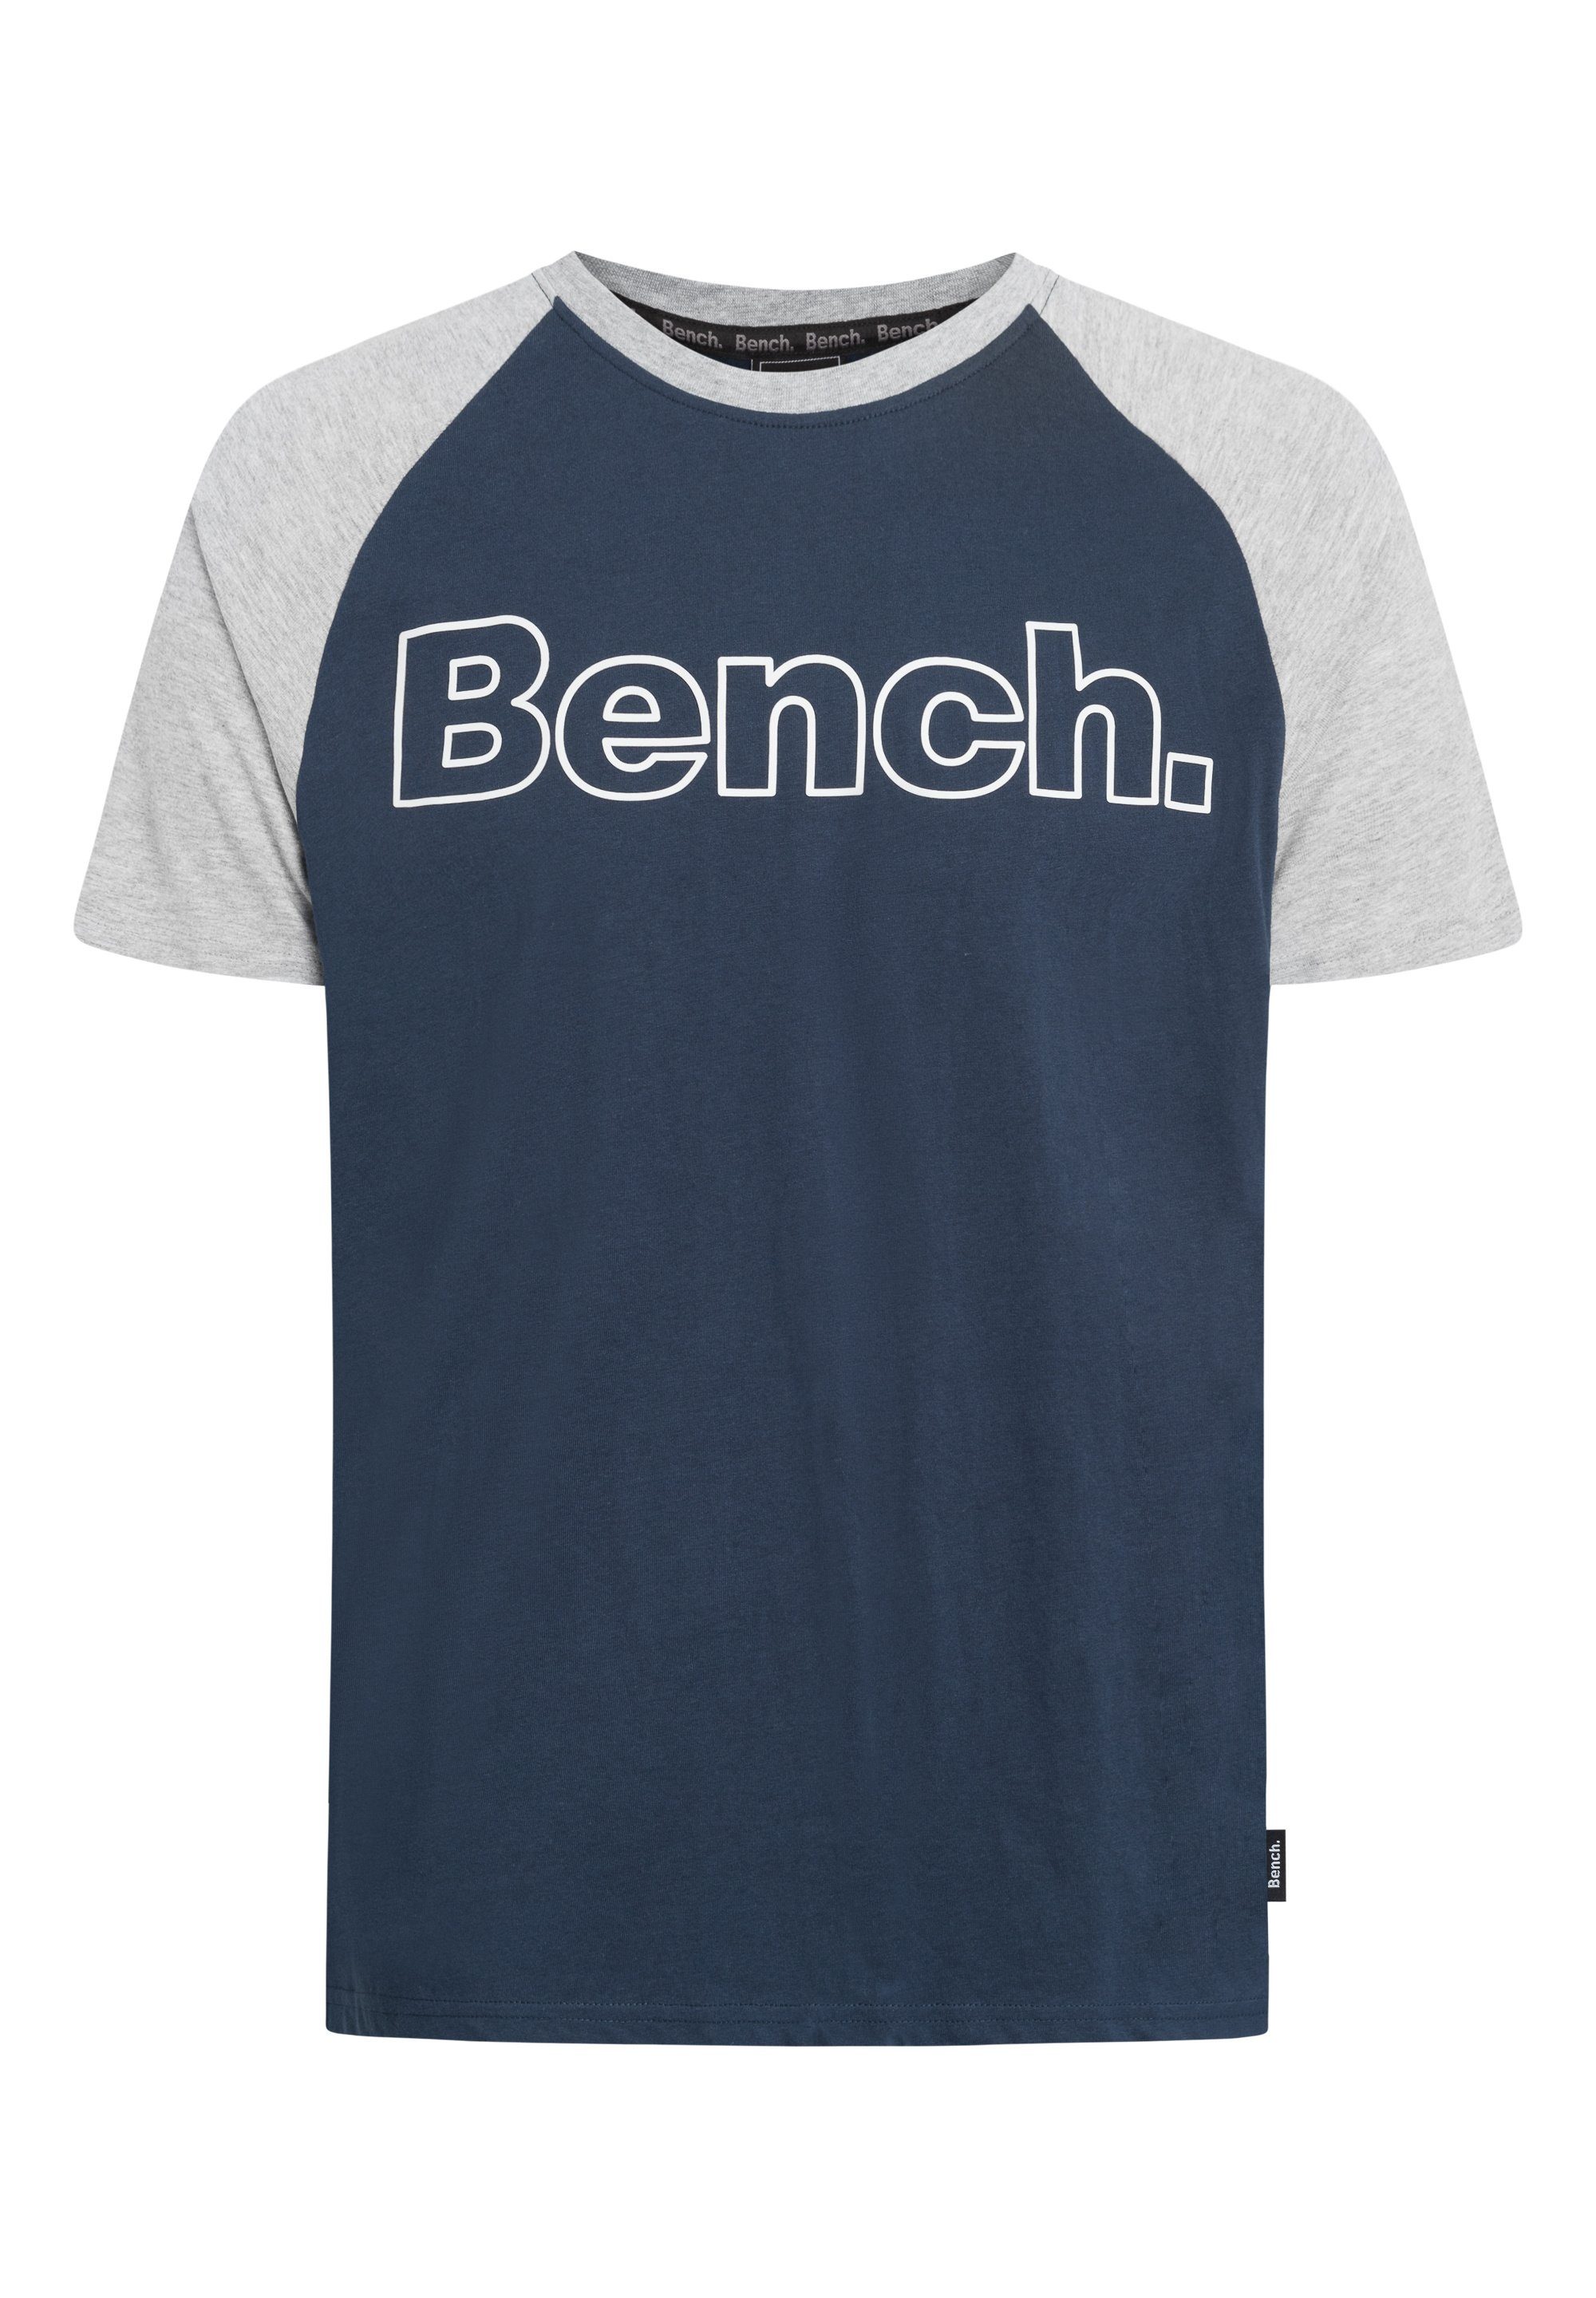 Bench. T-Shirt Rockwell Keine Angabe navy